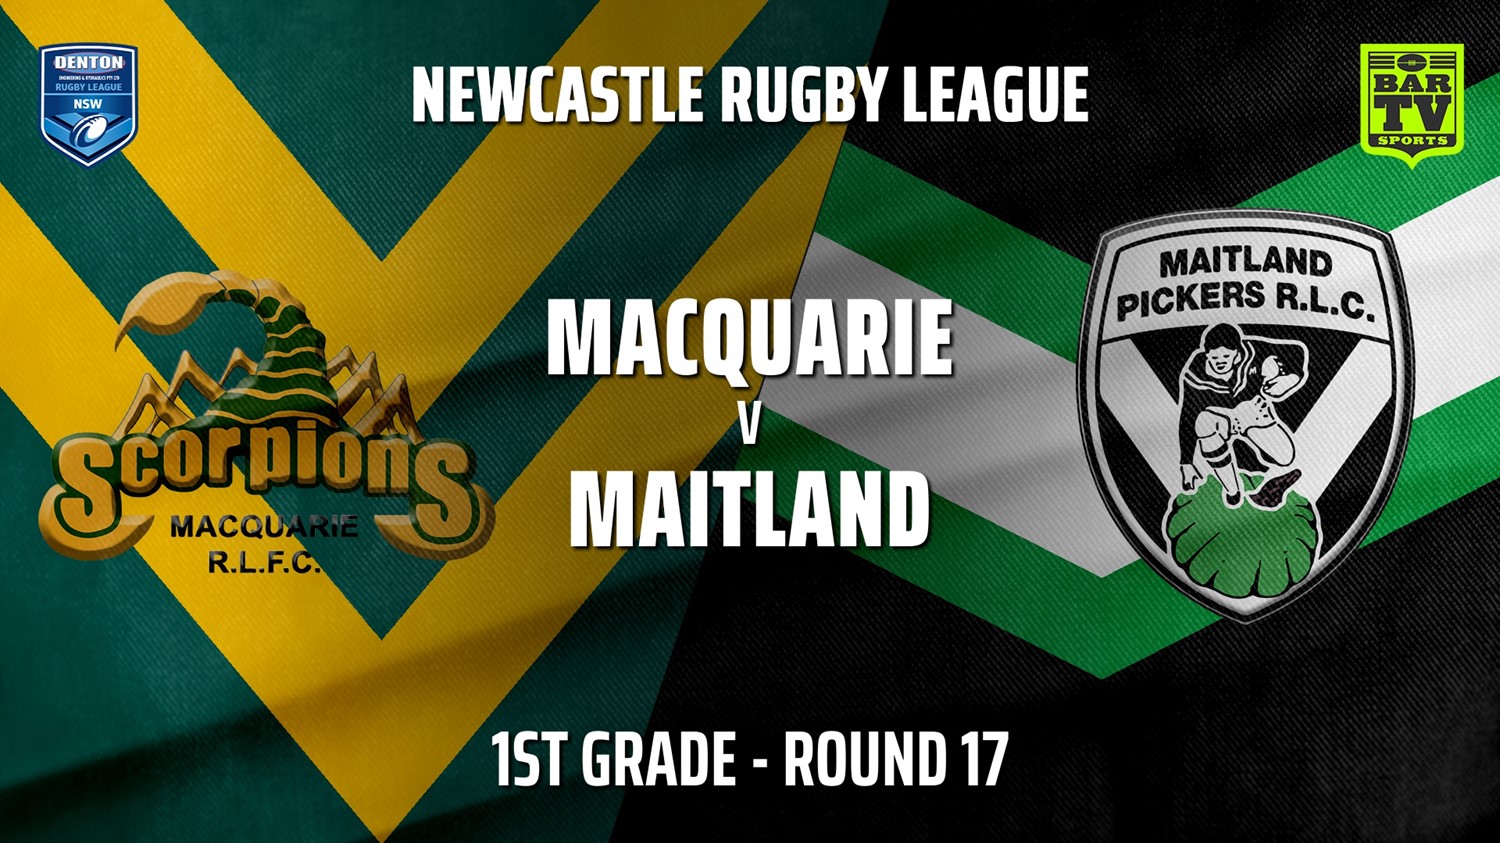 210731-Newcastle Round 17 - 1st Grade - Macquarie Scorpions v Maitland Pickers Minigame Slate Image